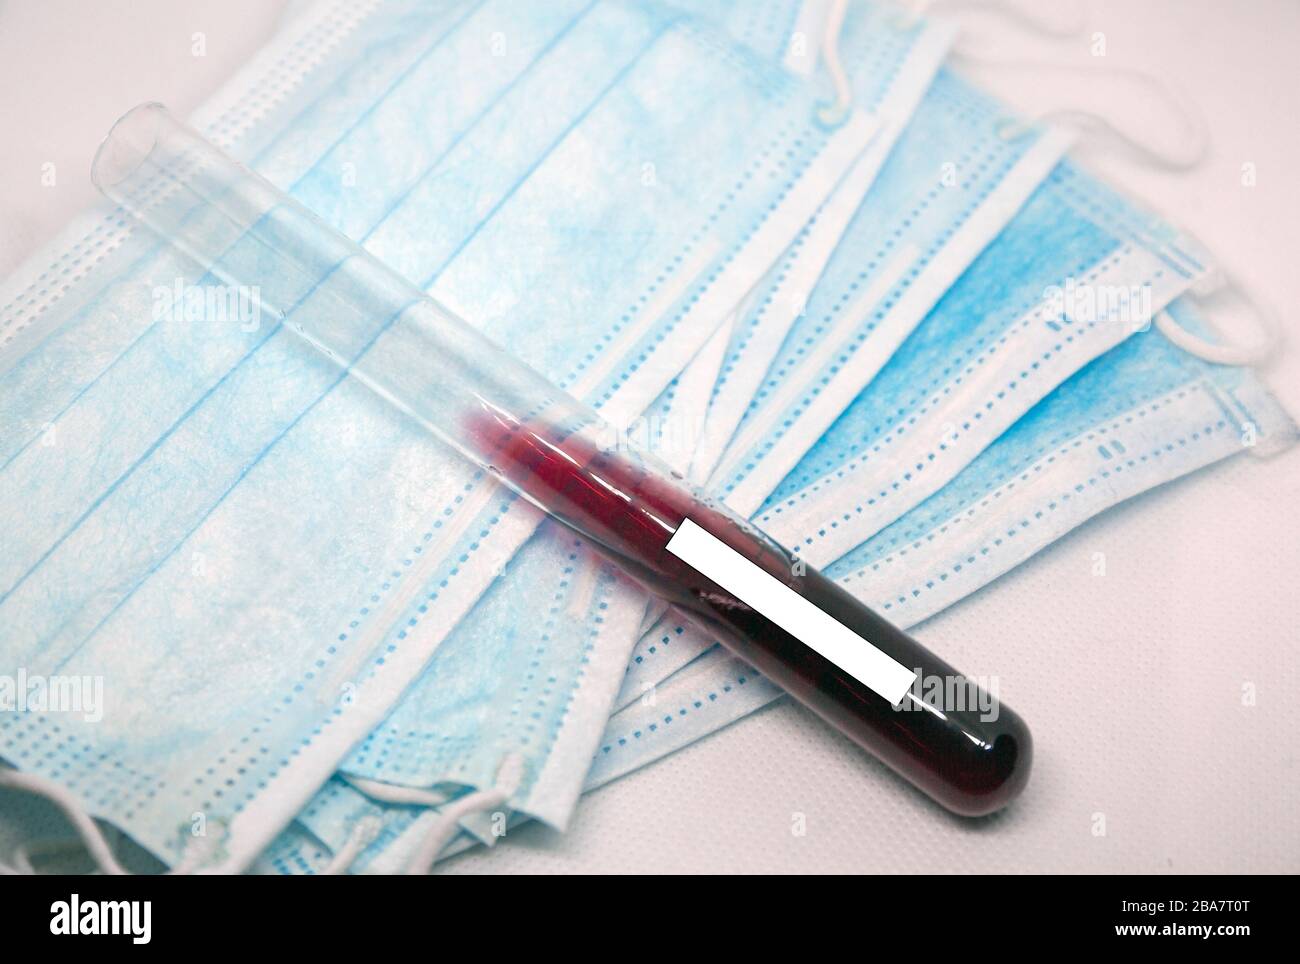 Mascarilla de protección quirúrgica con tubo de análisis de sangre. Foto de stock